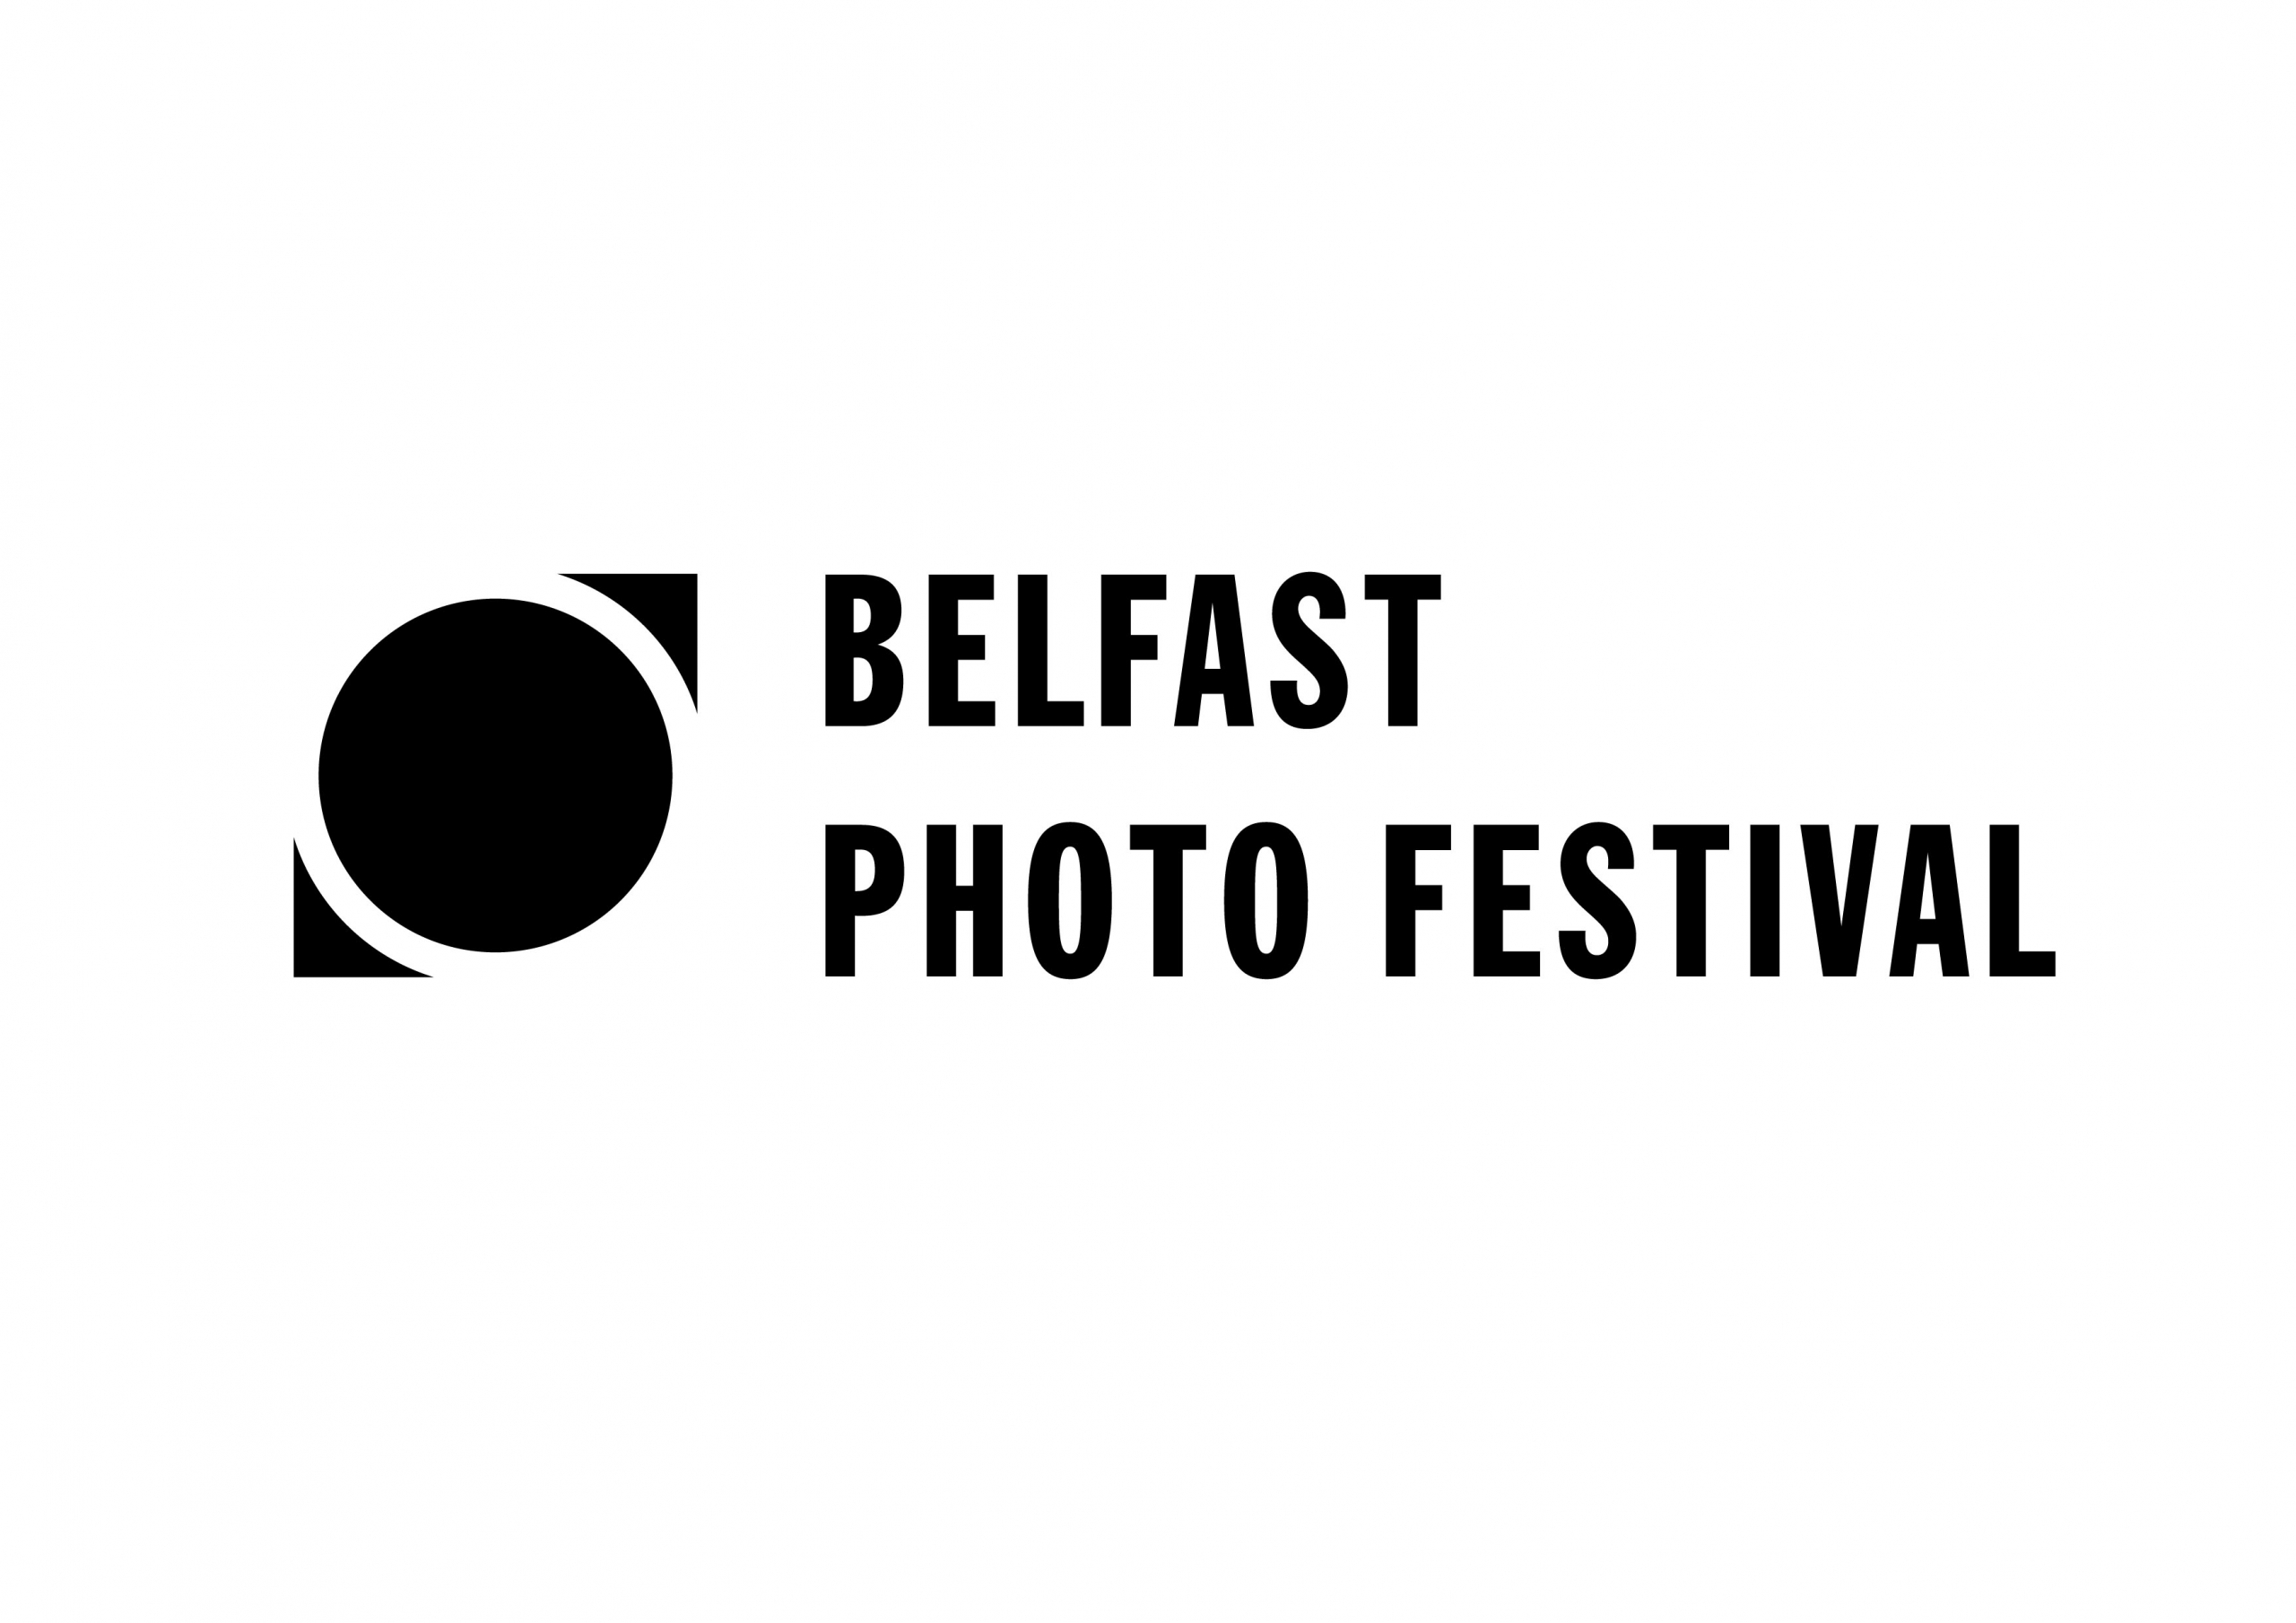 Belfast Photo Festival